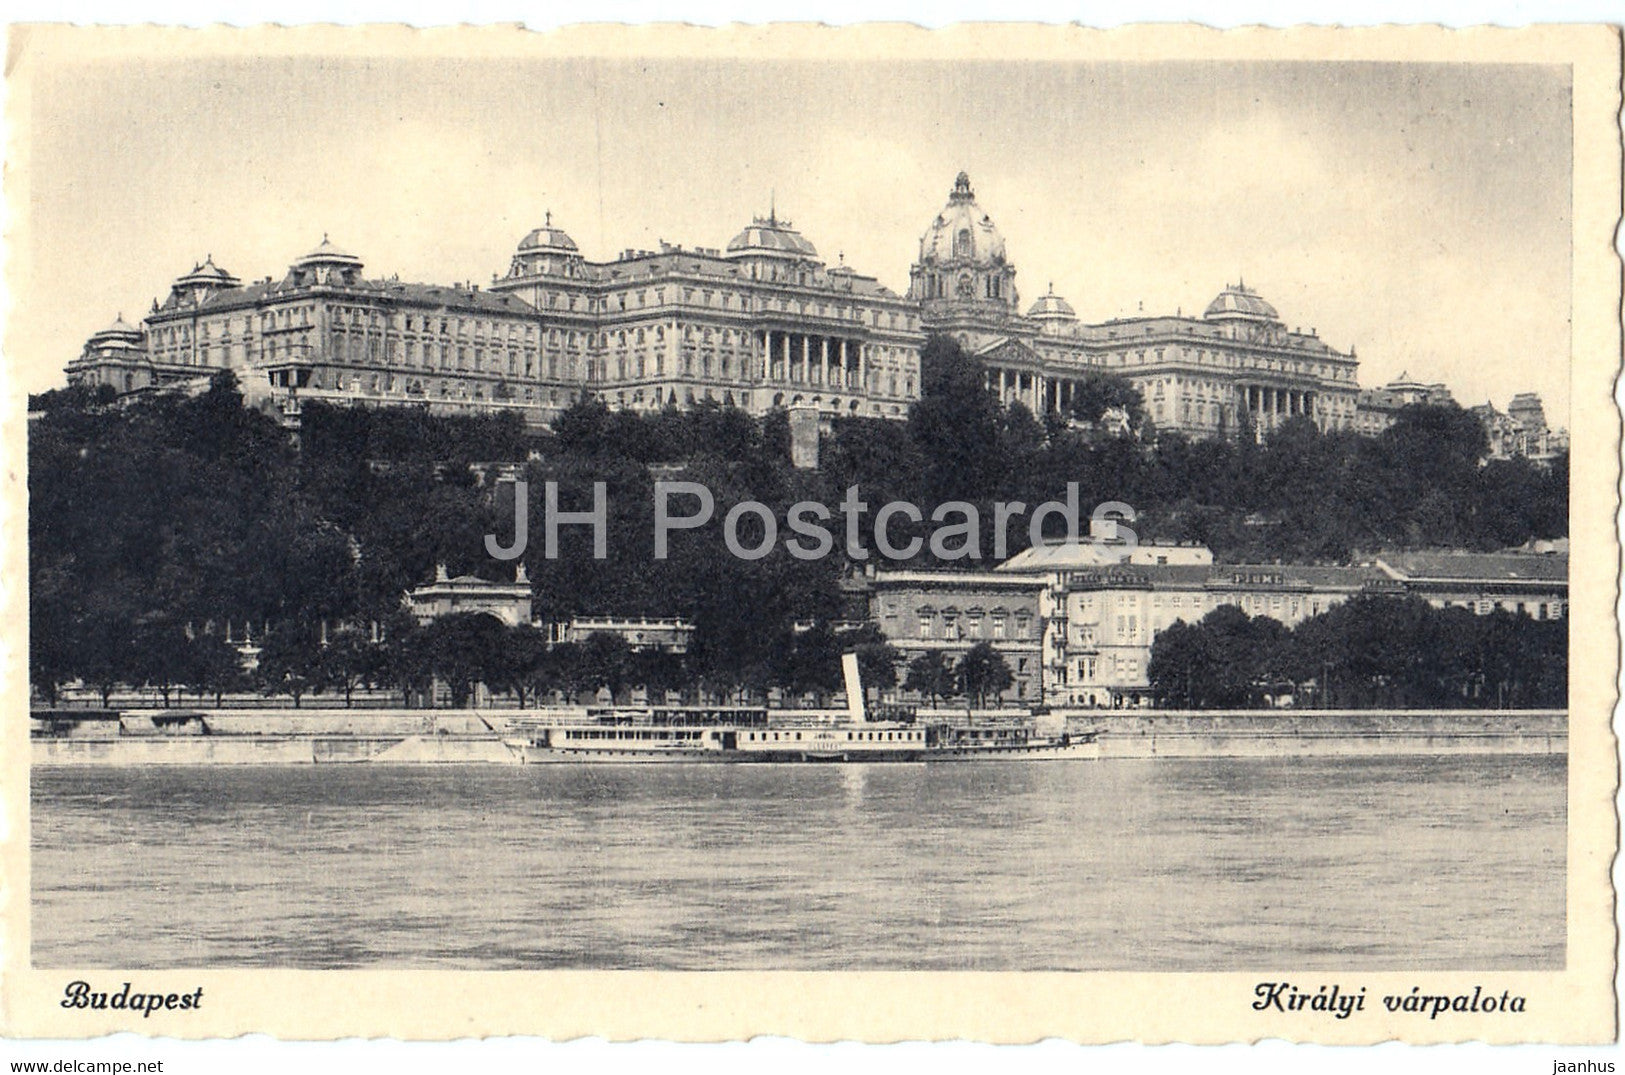 Budapest - Kiralyi varpalota - Konigliche Burg - steamer - ship - old postcard - Hungary - unused - JH Postcards